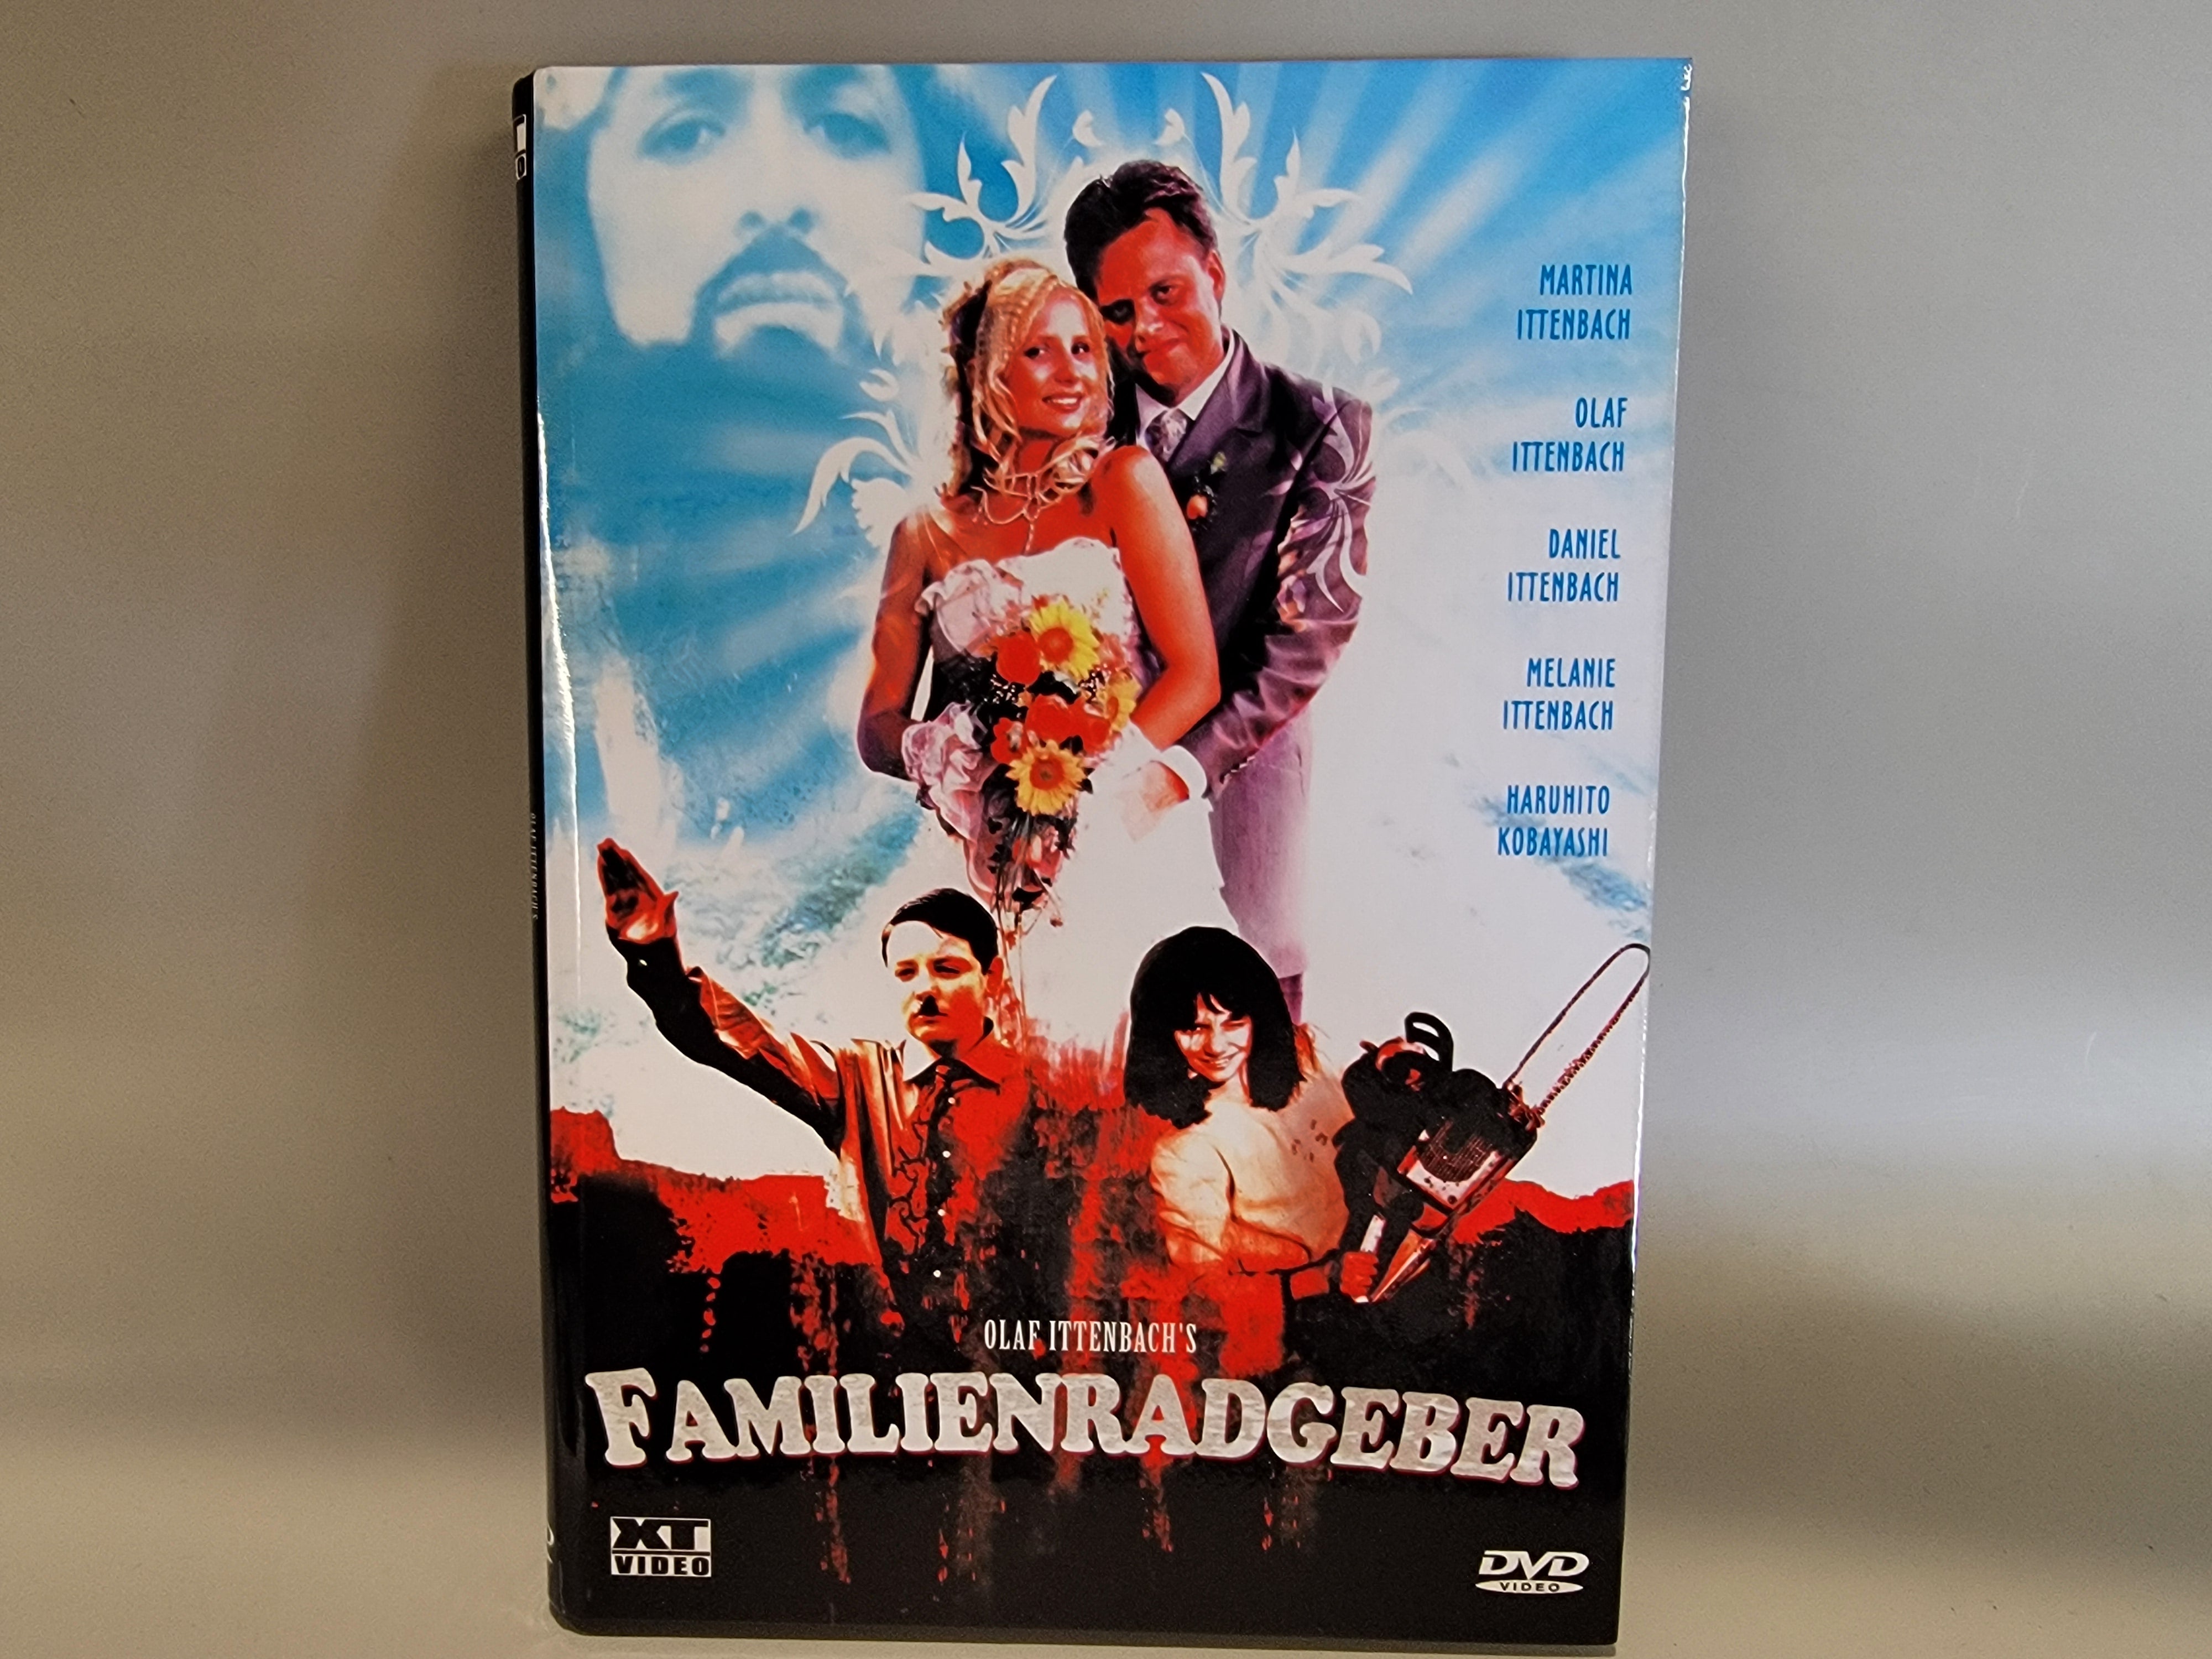 FAMILIENRADGEBER (REGION 2 IMPORT - LIMITED EDITION) DVD [USED]